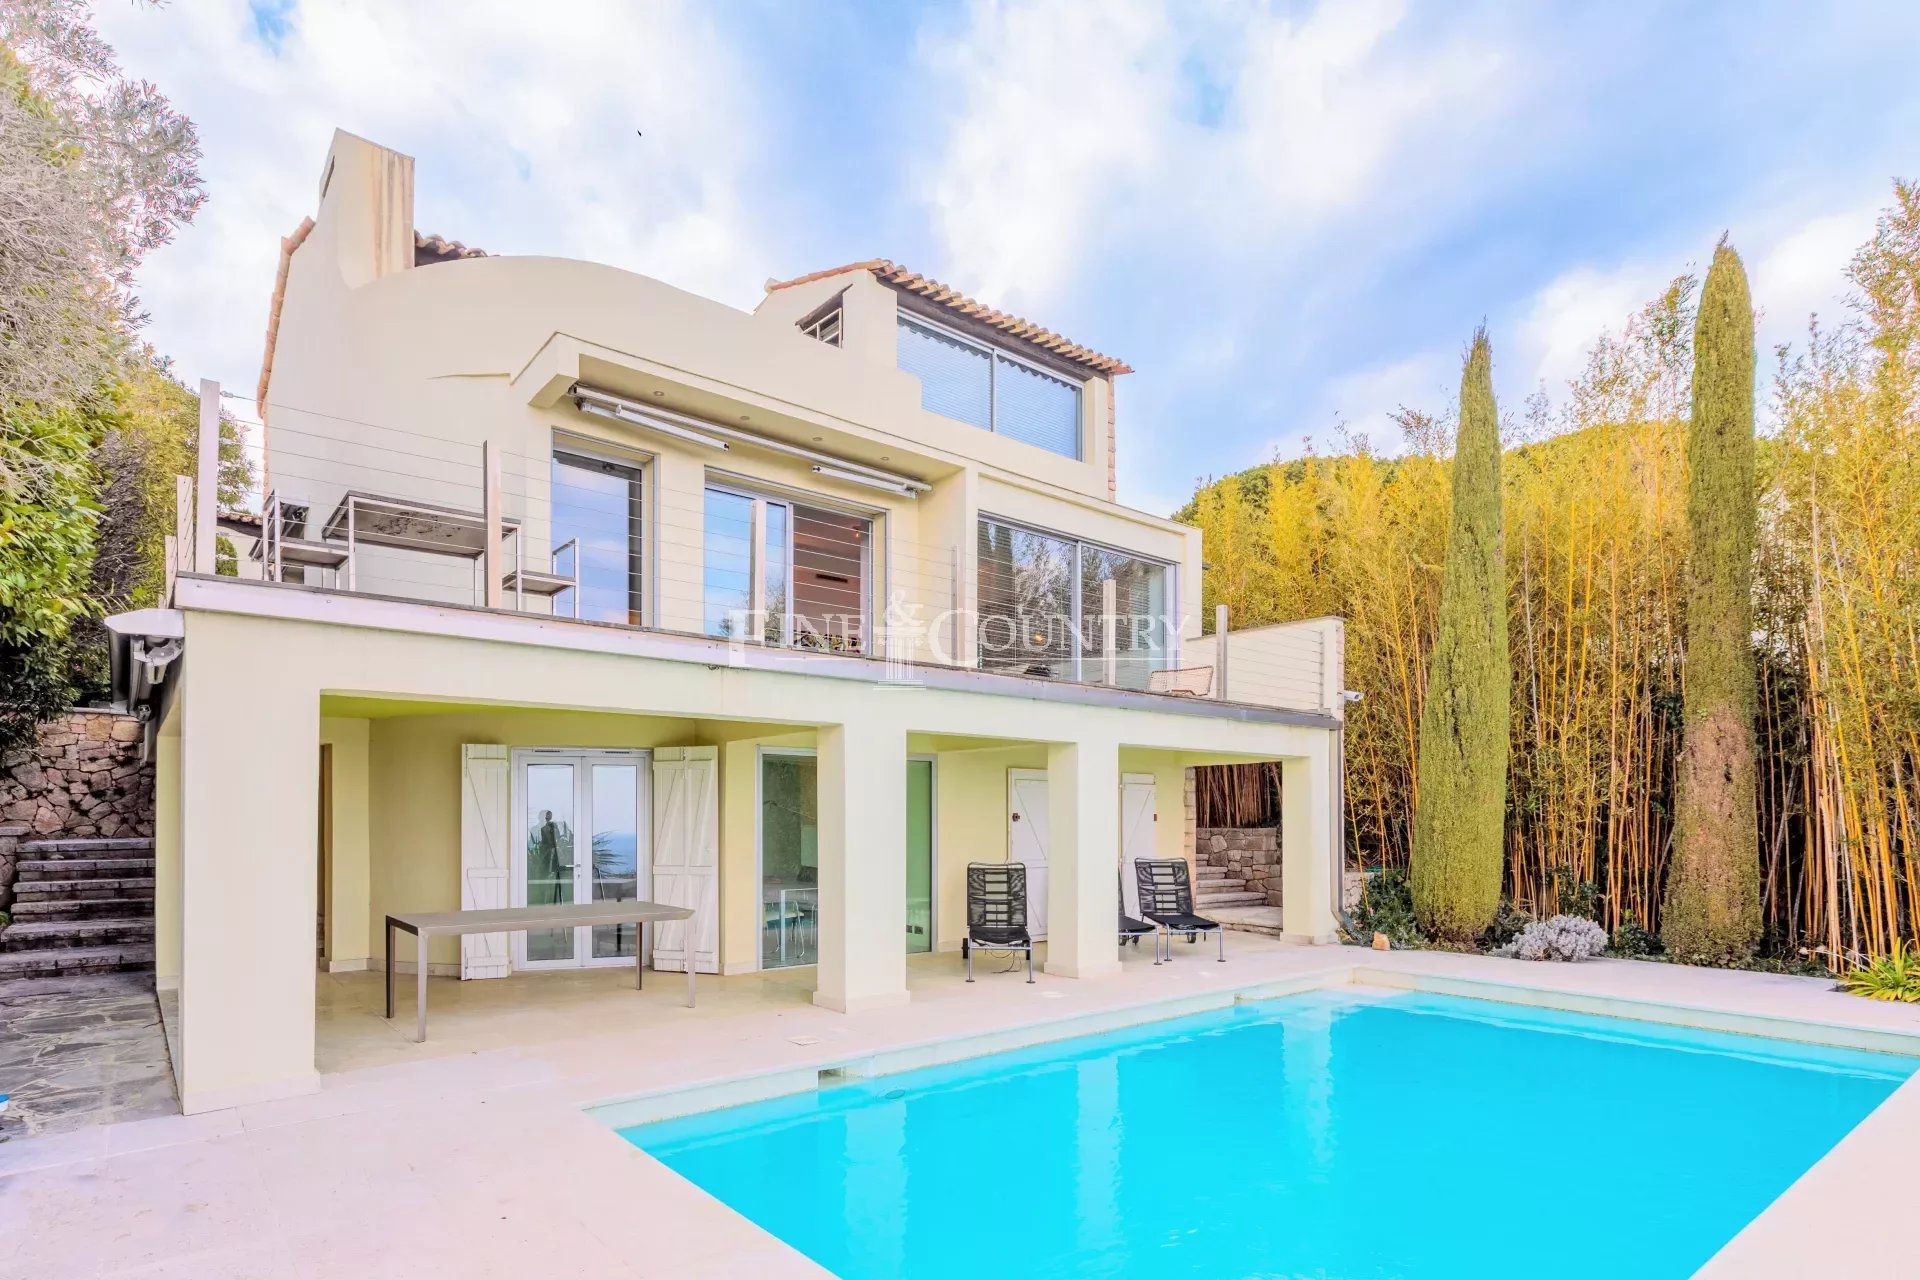 Villa for sale in Super Cannes panoramic sea view